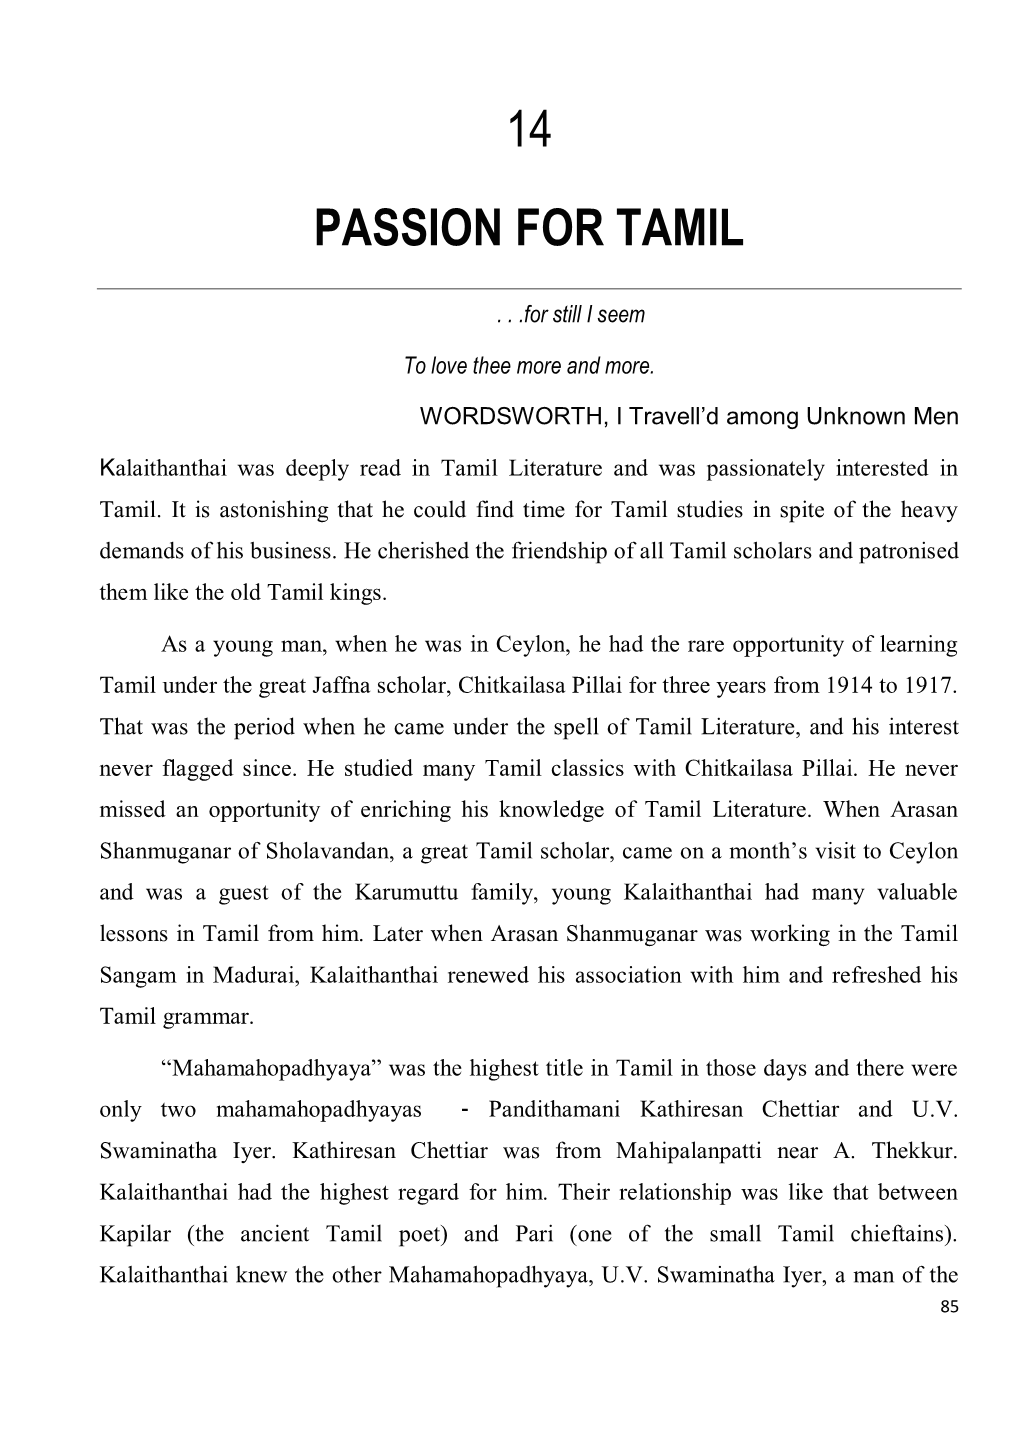 Karumuttu's Passion for Tamil